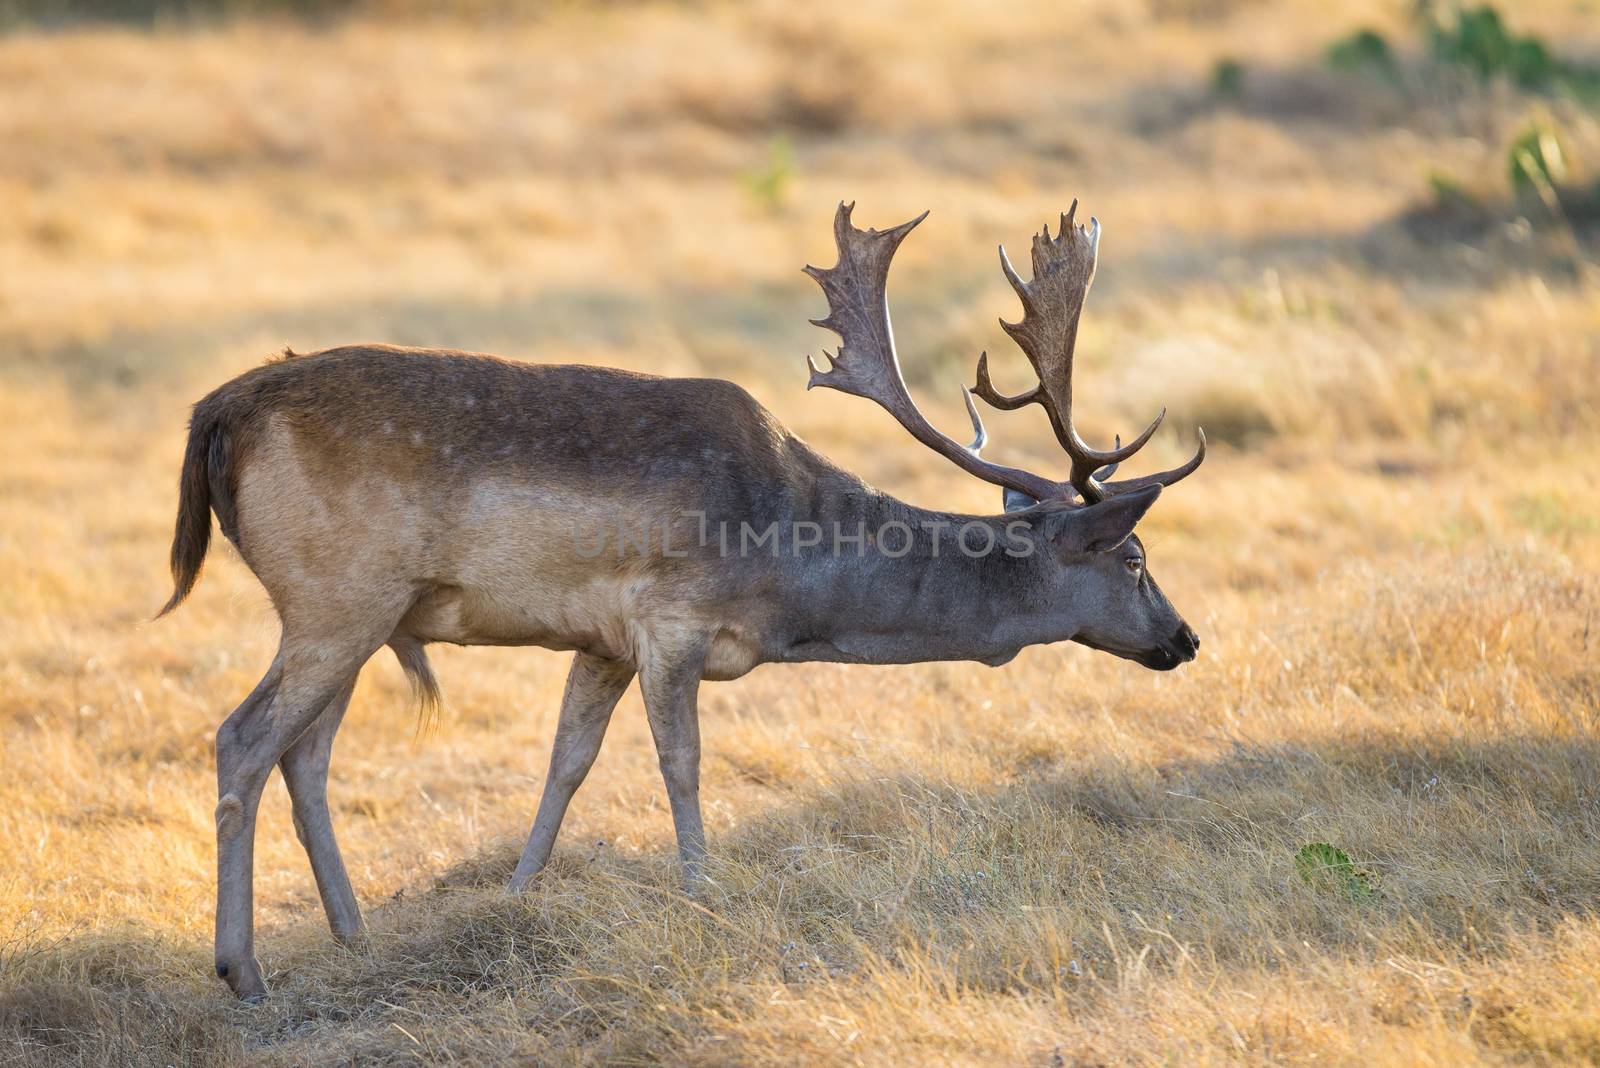 Wild South Texas Spotted fallow deer buck